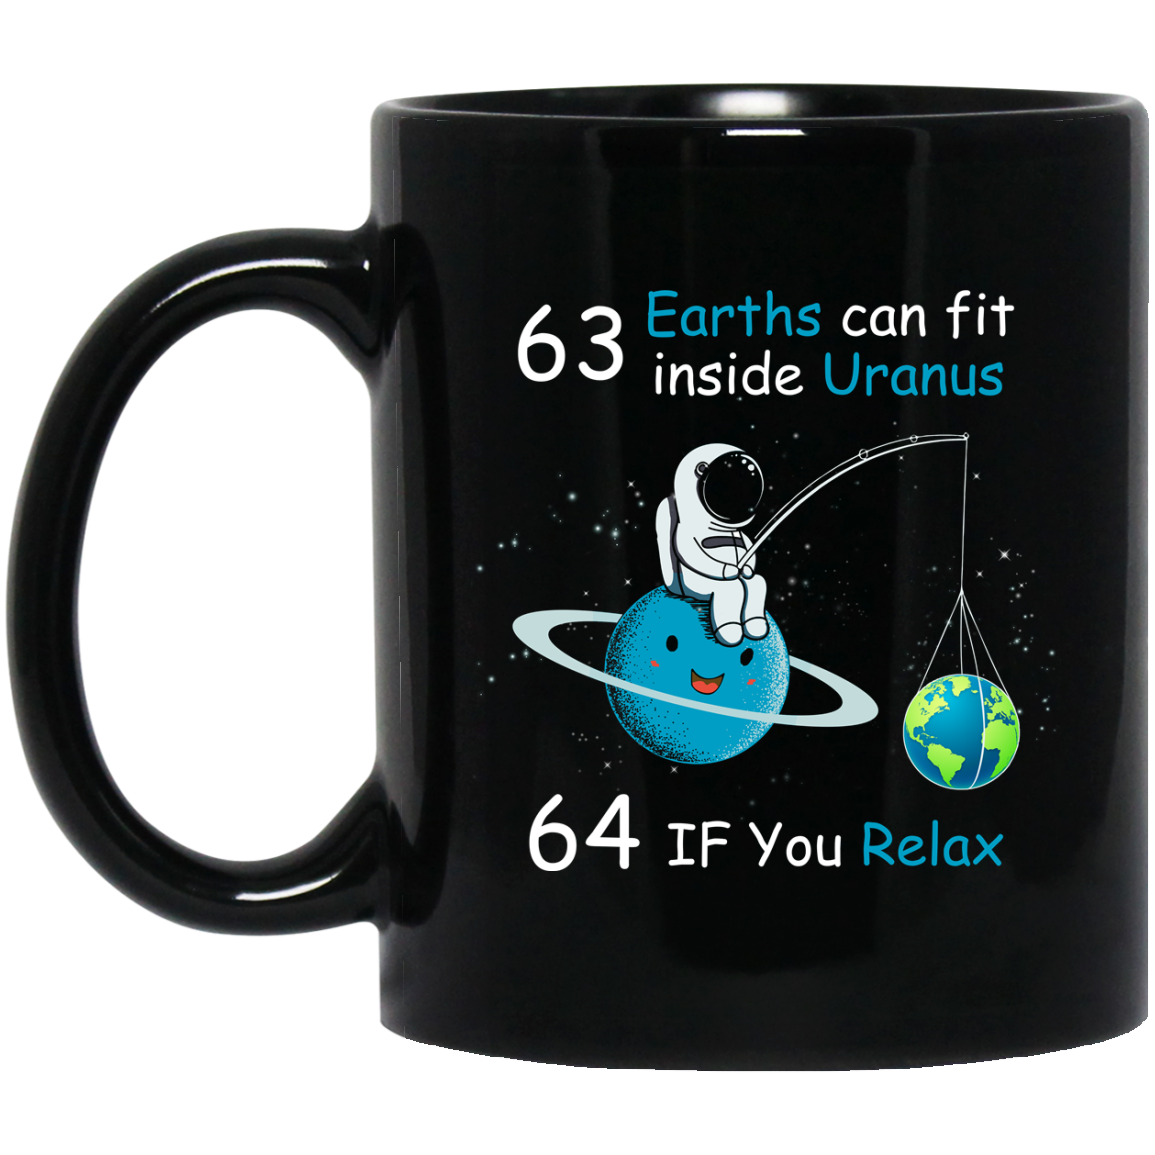 inside 63 earths can fit uranus - 63 Earths can fit inside Uranus 64 If You Relax